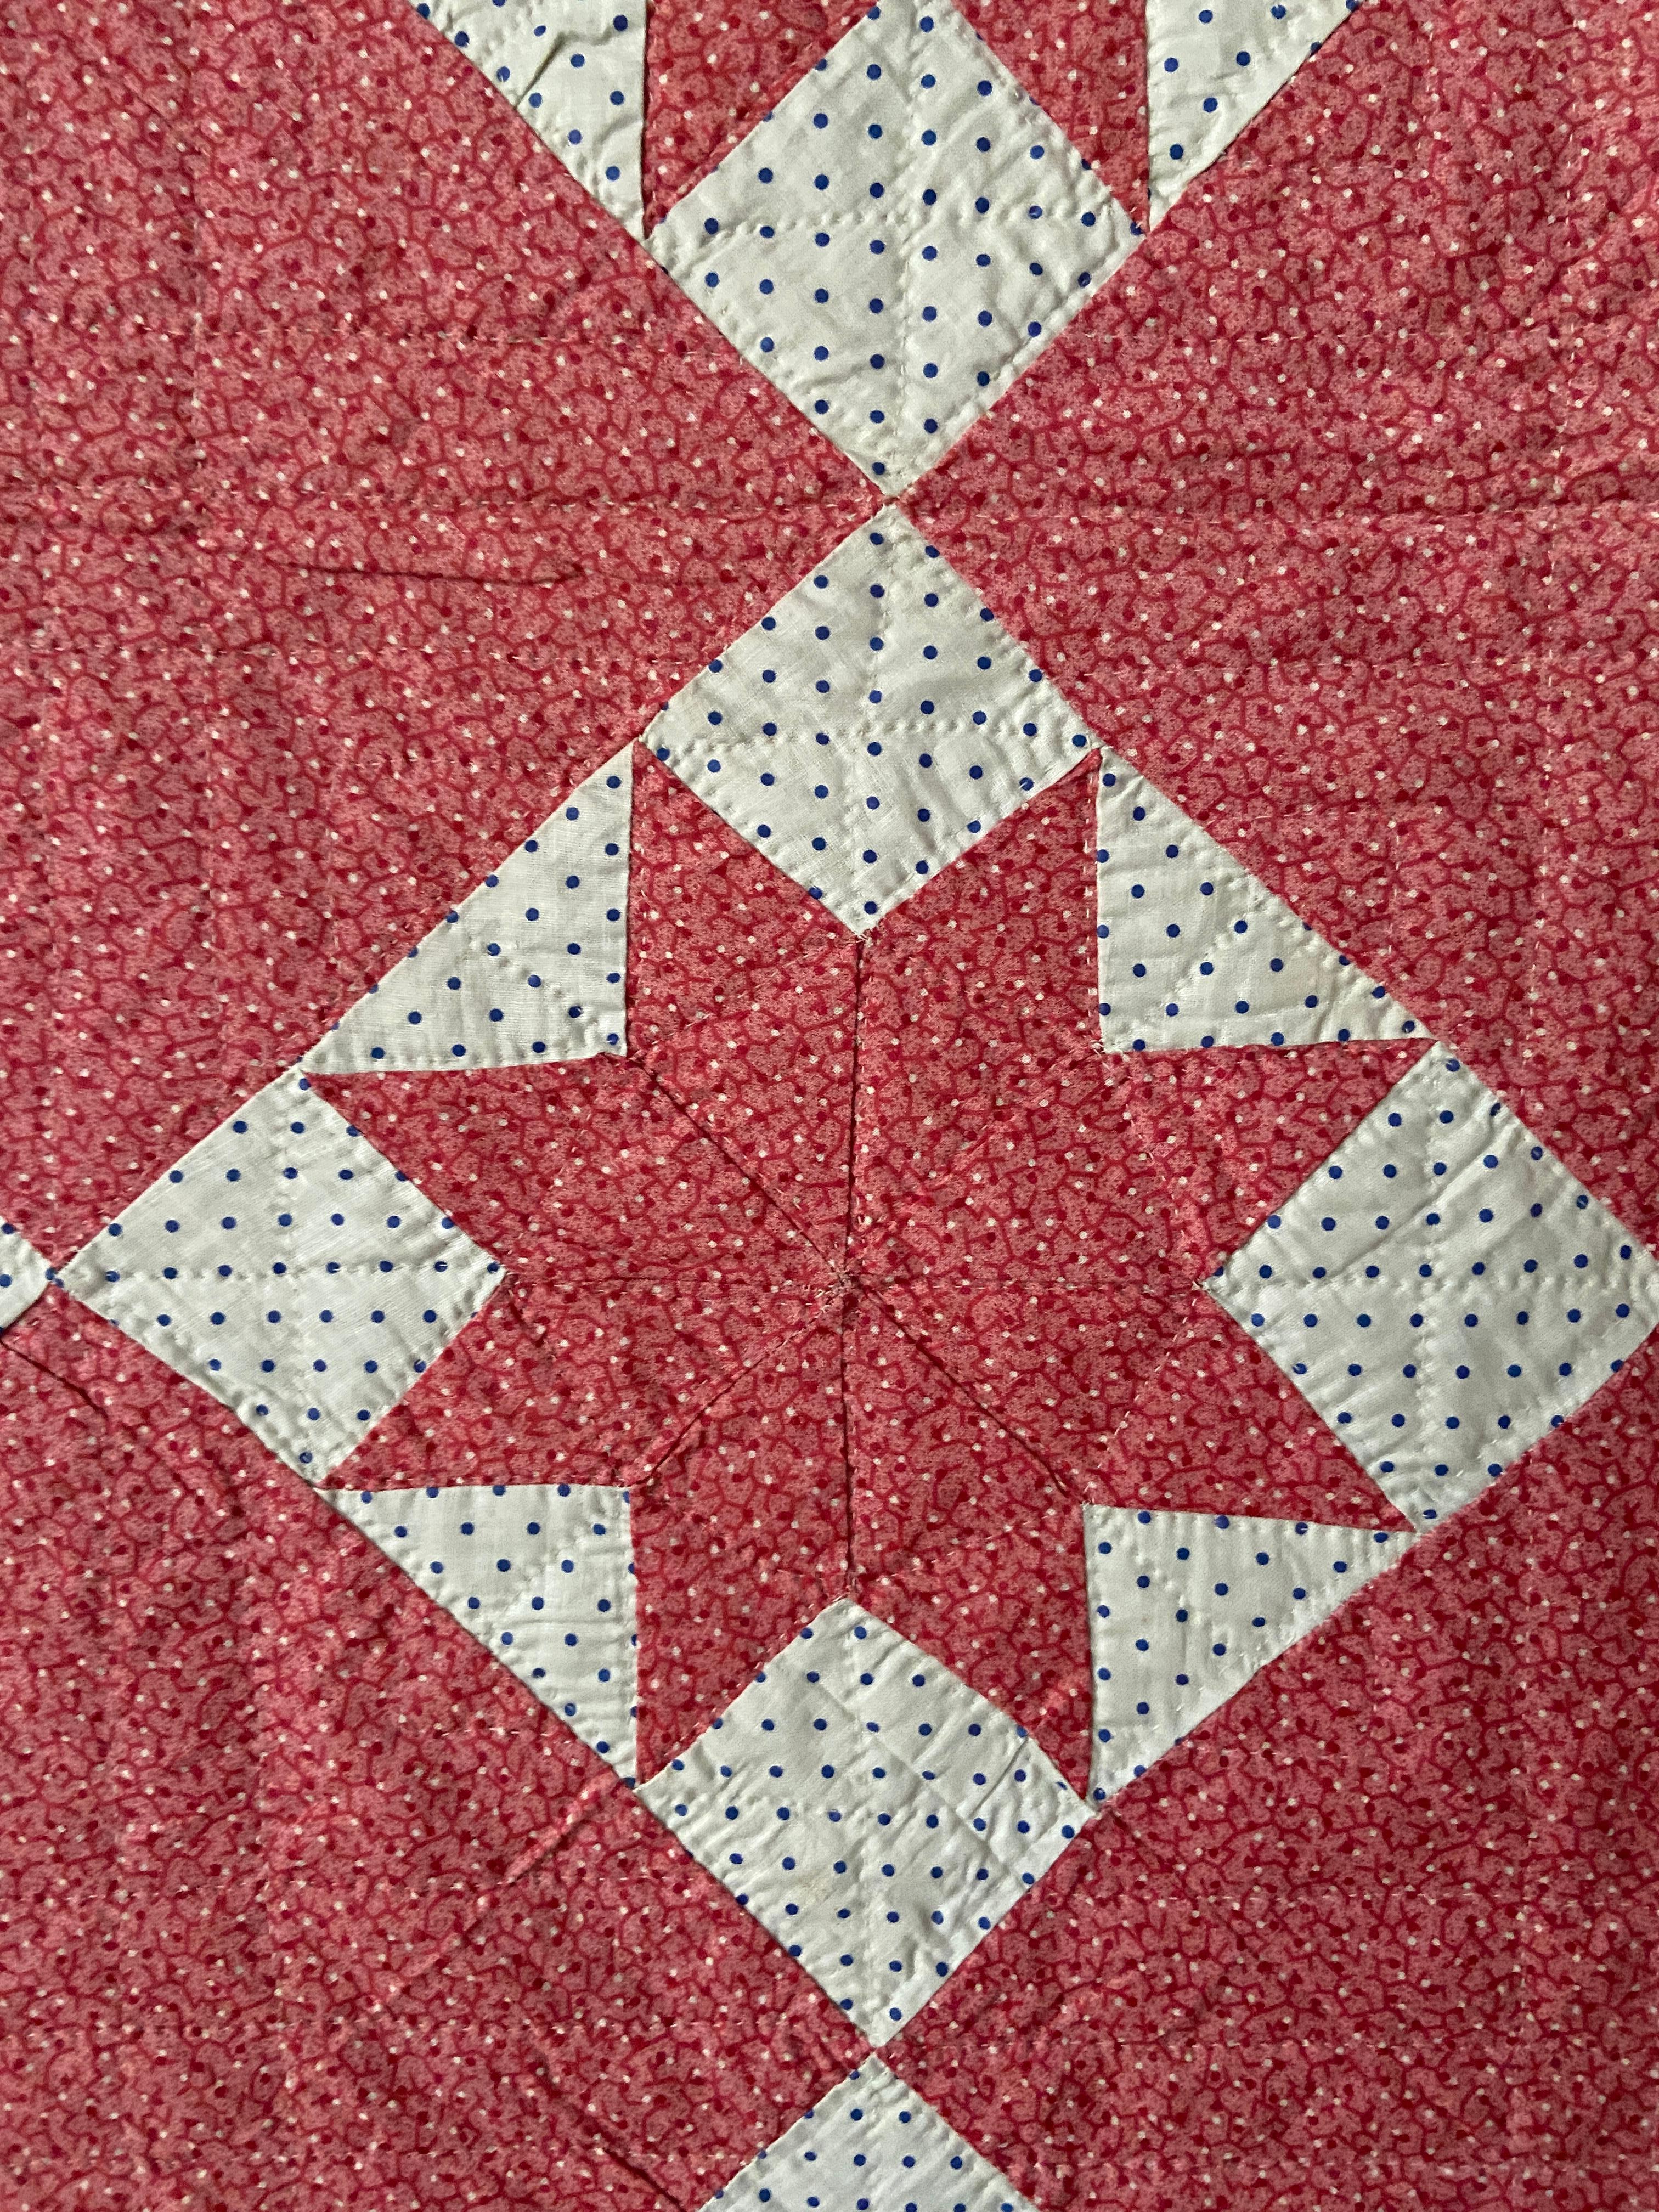 American Antique Patchwork Quilt 